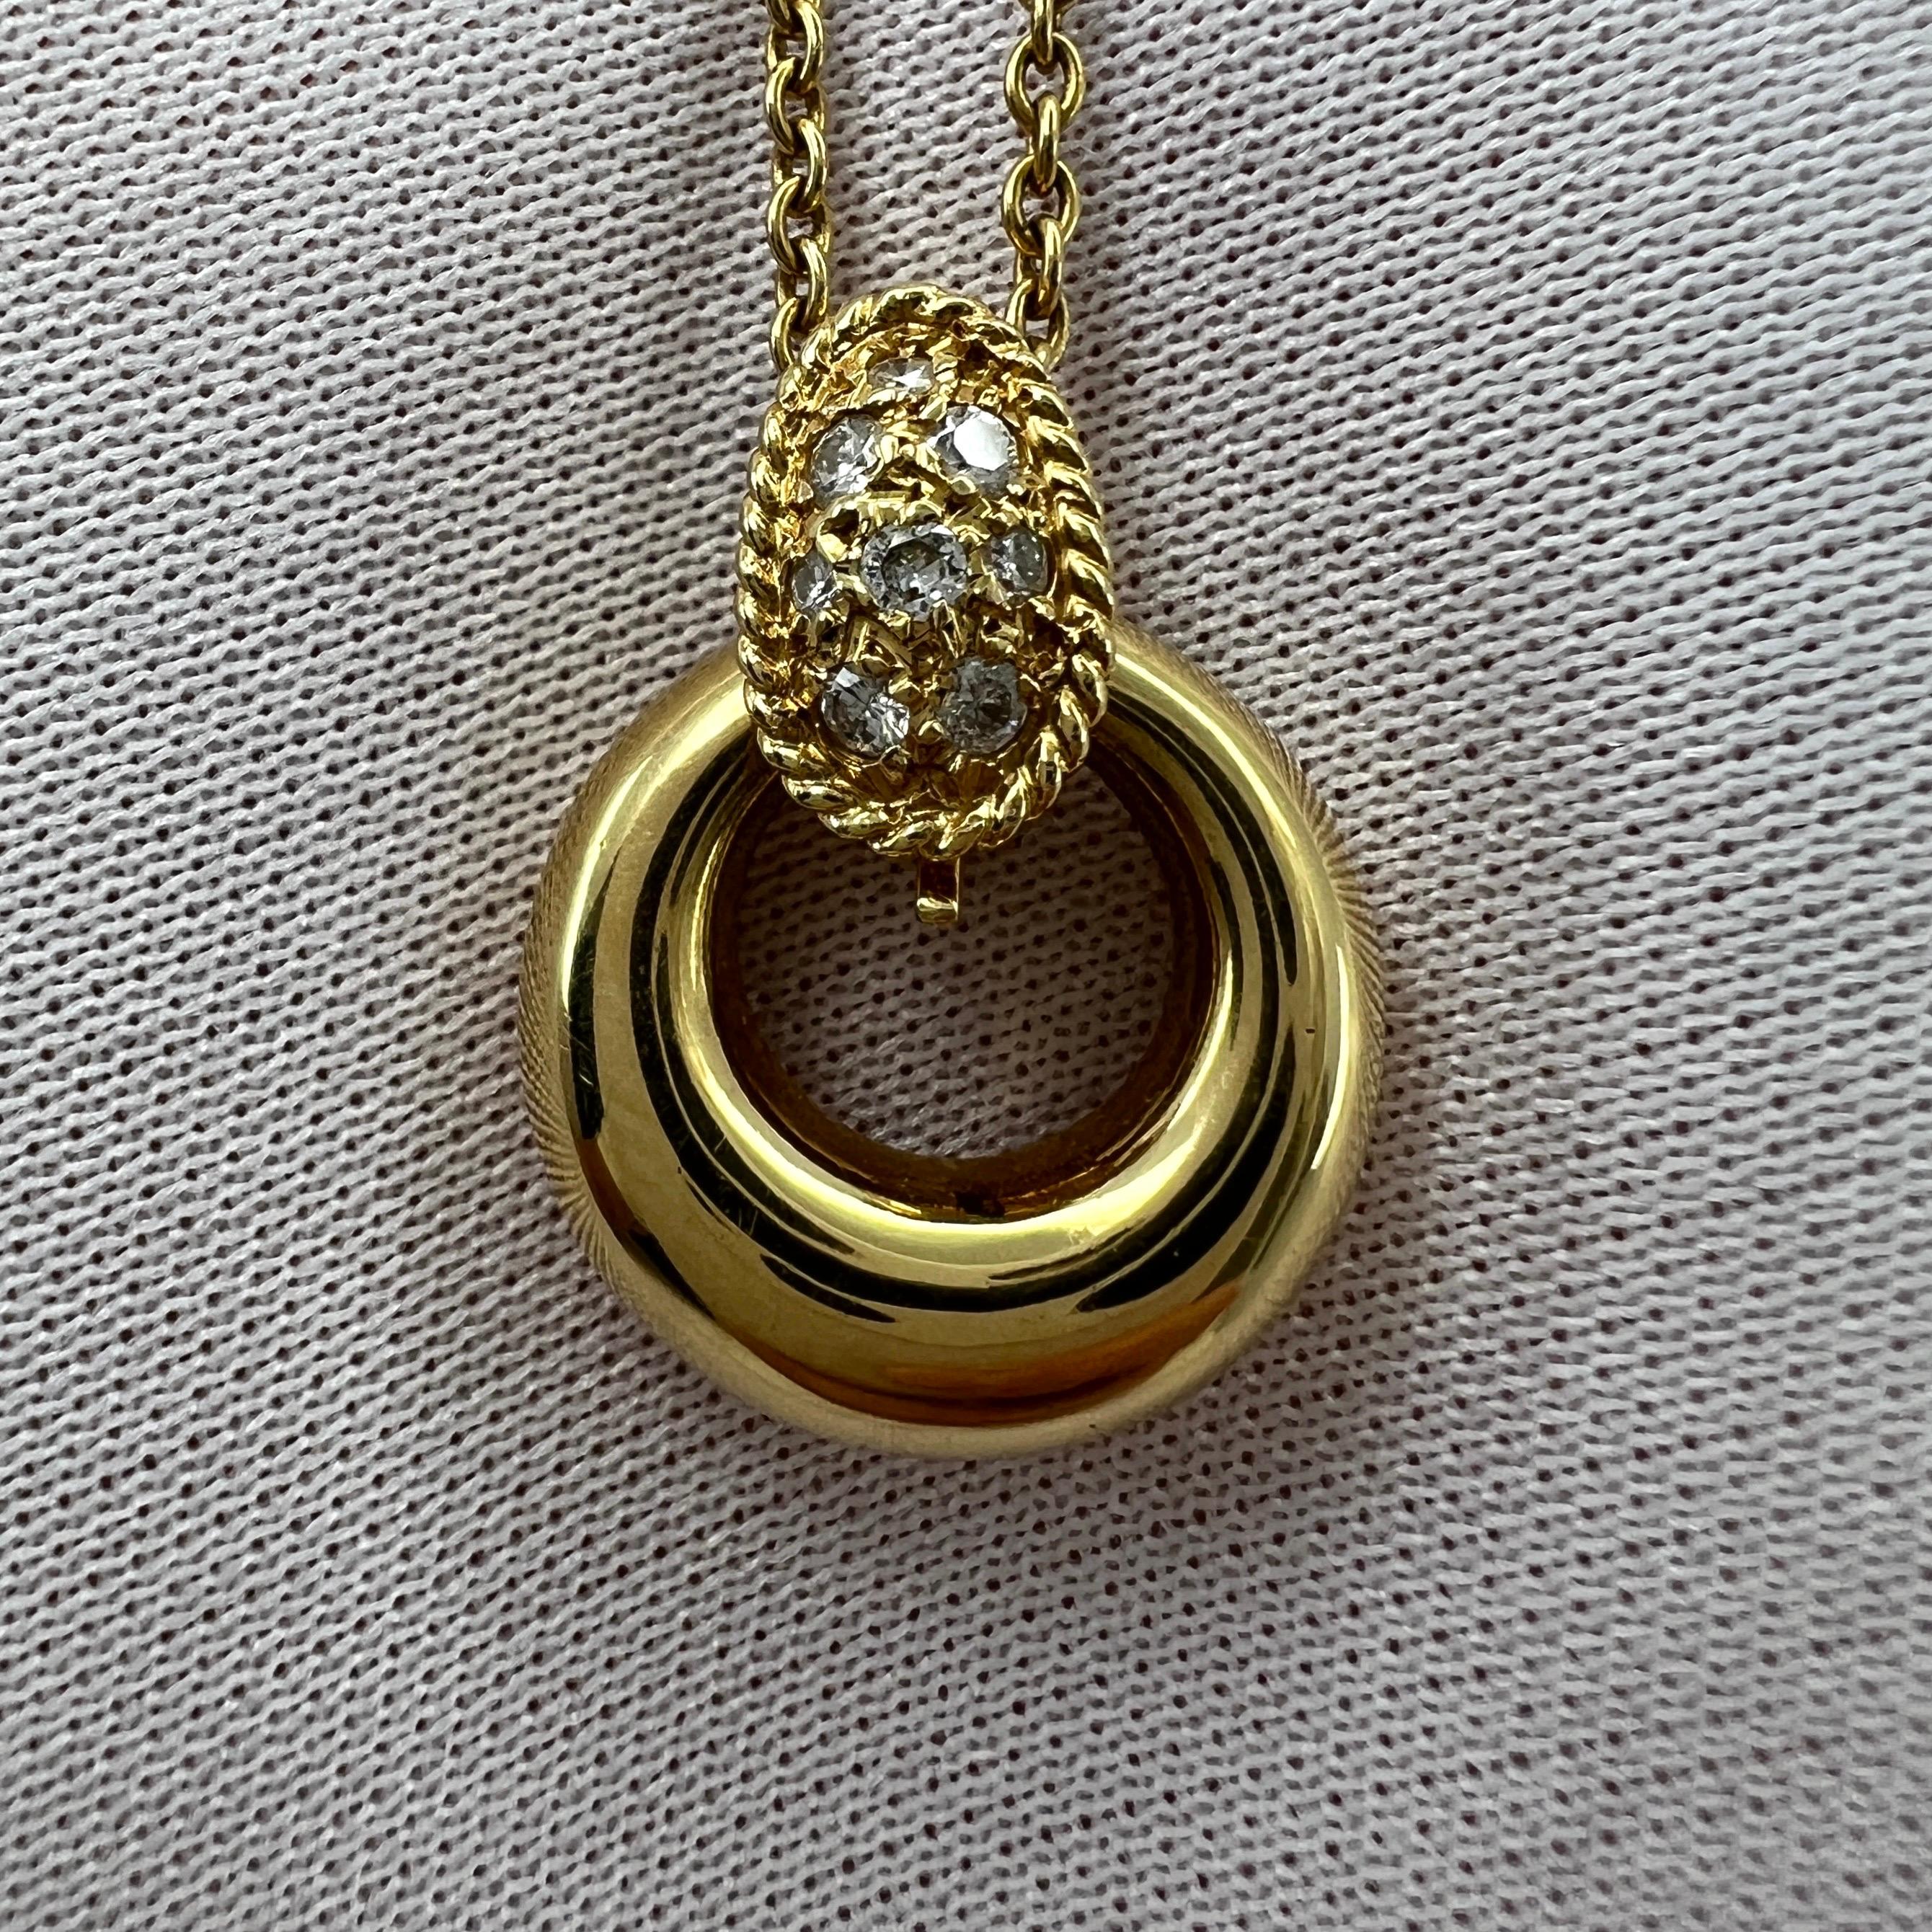 Round Cut Rare Vintage Van Cleef & Arpels Round Diamond 18k Yellow Gold Pendant Necklace For Sale